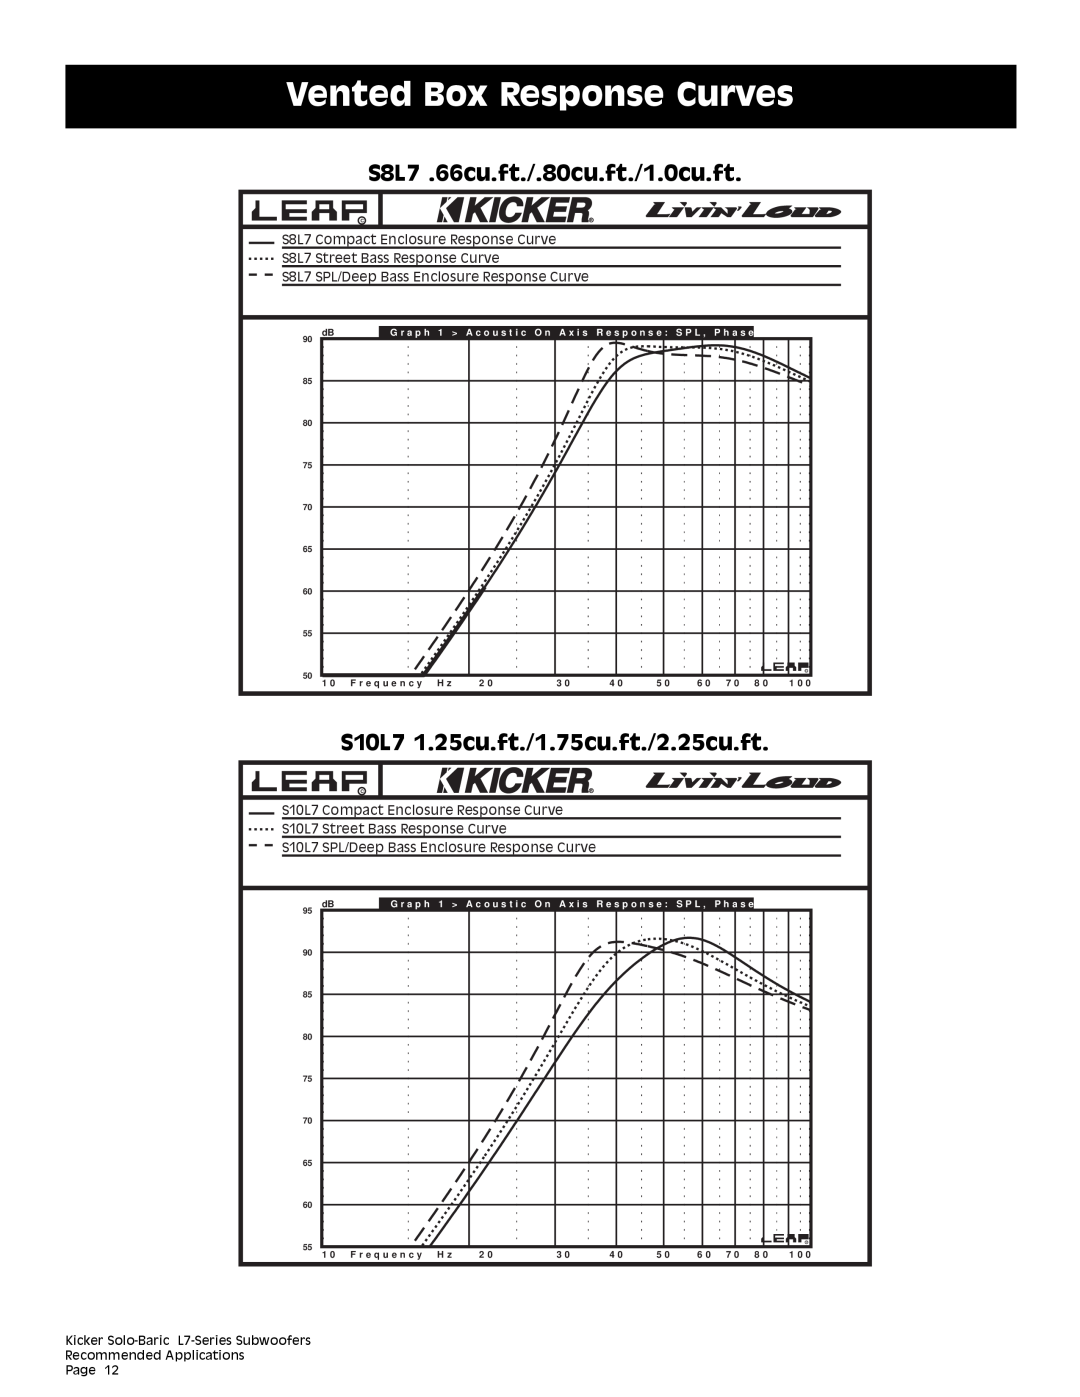 Kicker Vented Box Response Curves, S8L7 .66cu.ft./.80cu.ft./1.0cu.ft, S10L7 1.25cu.ft./1.75cu.ft./2.25cu.ft 